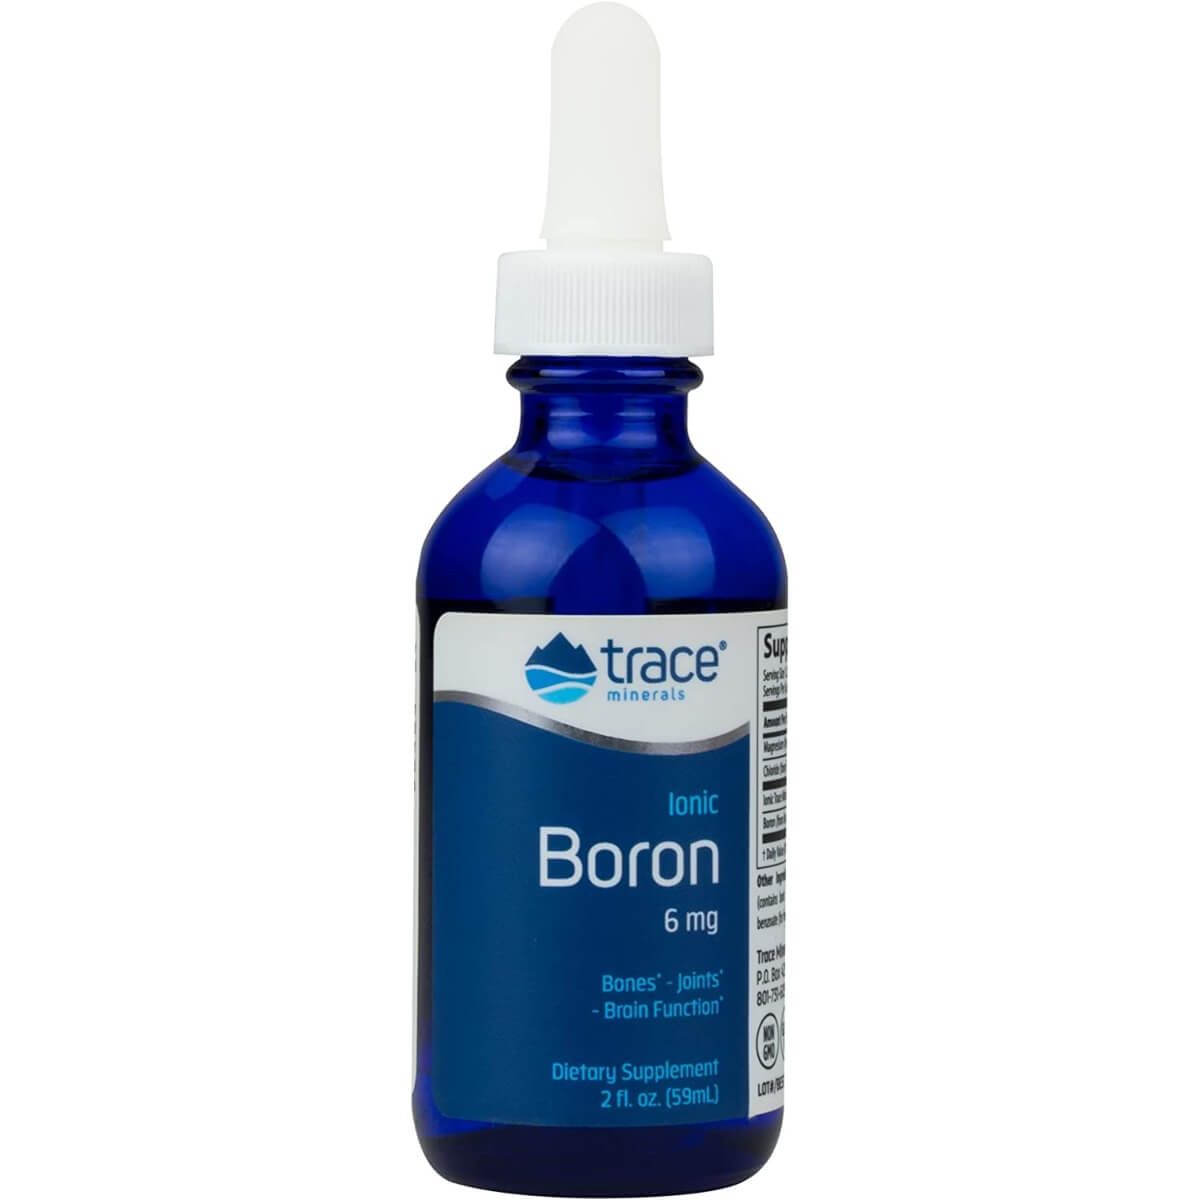 Trace Minerals Ionic Boron 6mg 2 fl oz (59ml) | Premium Supplements at MYSUPPLEMENTSHOP